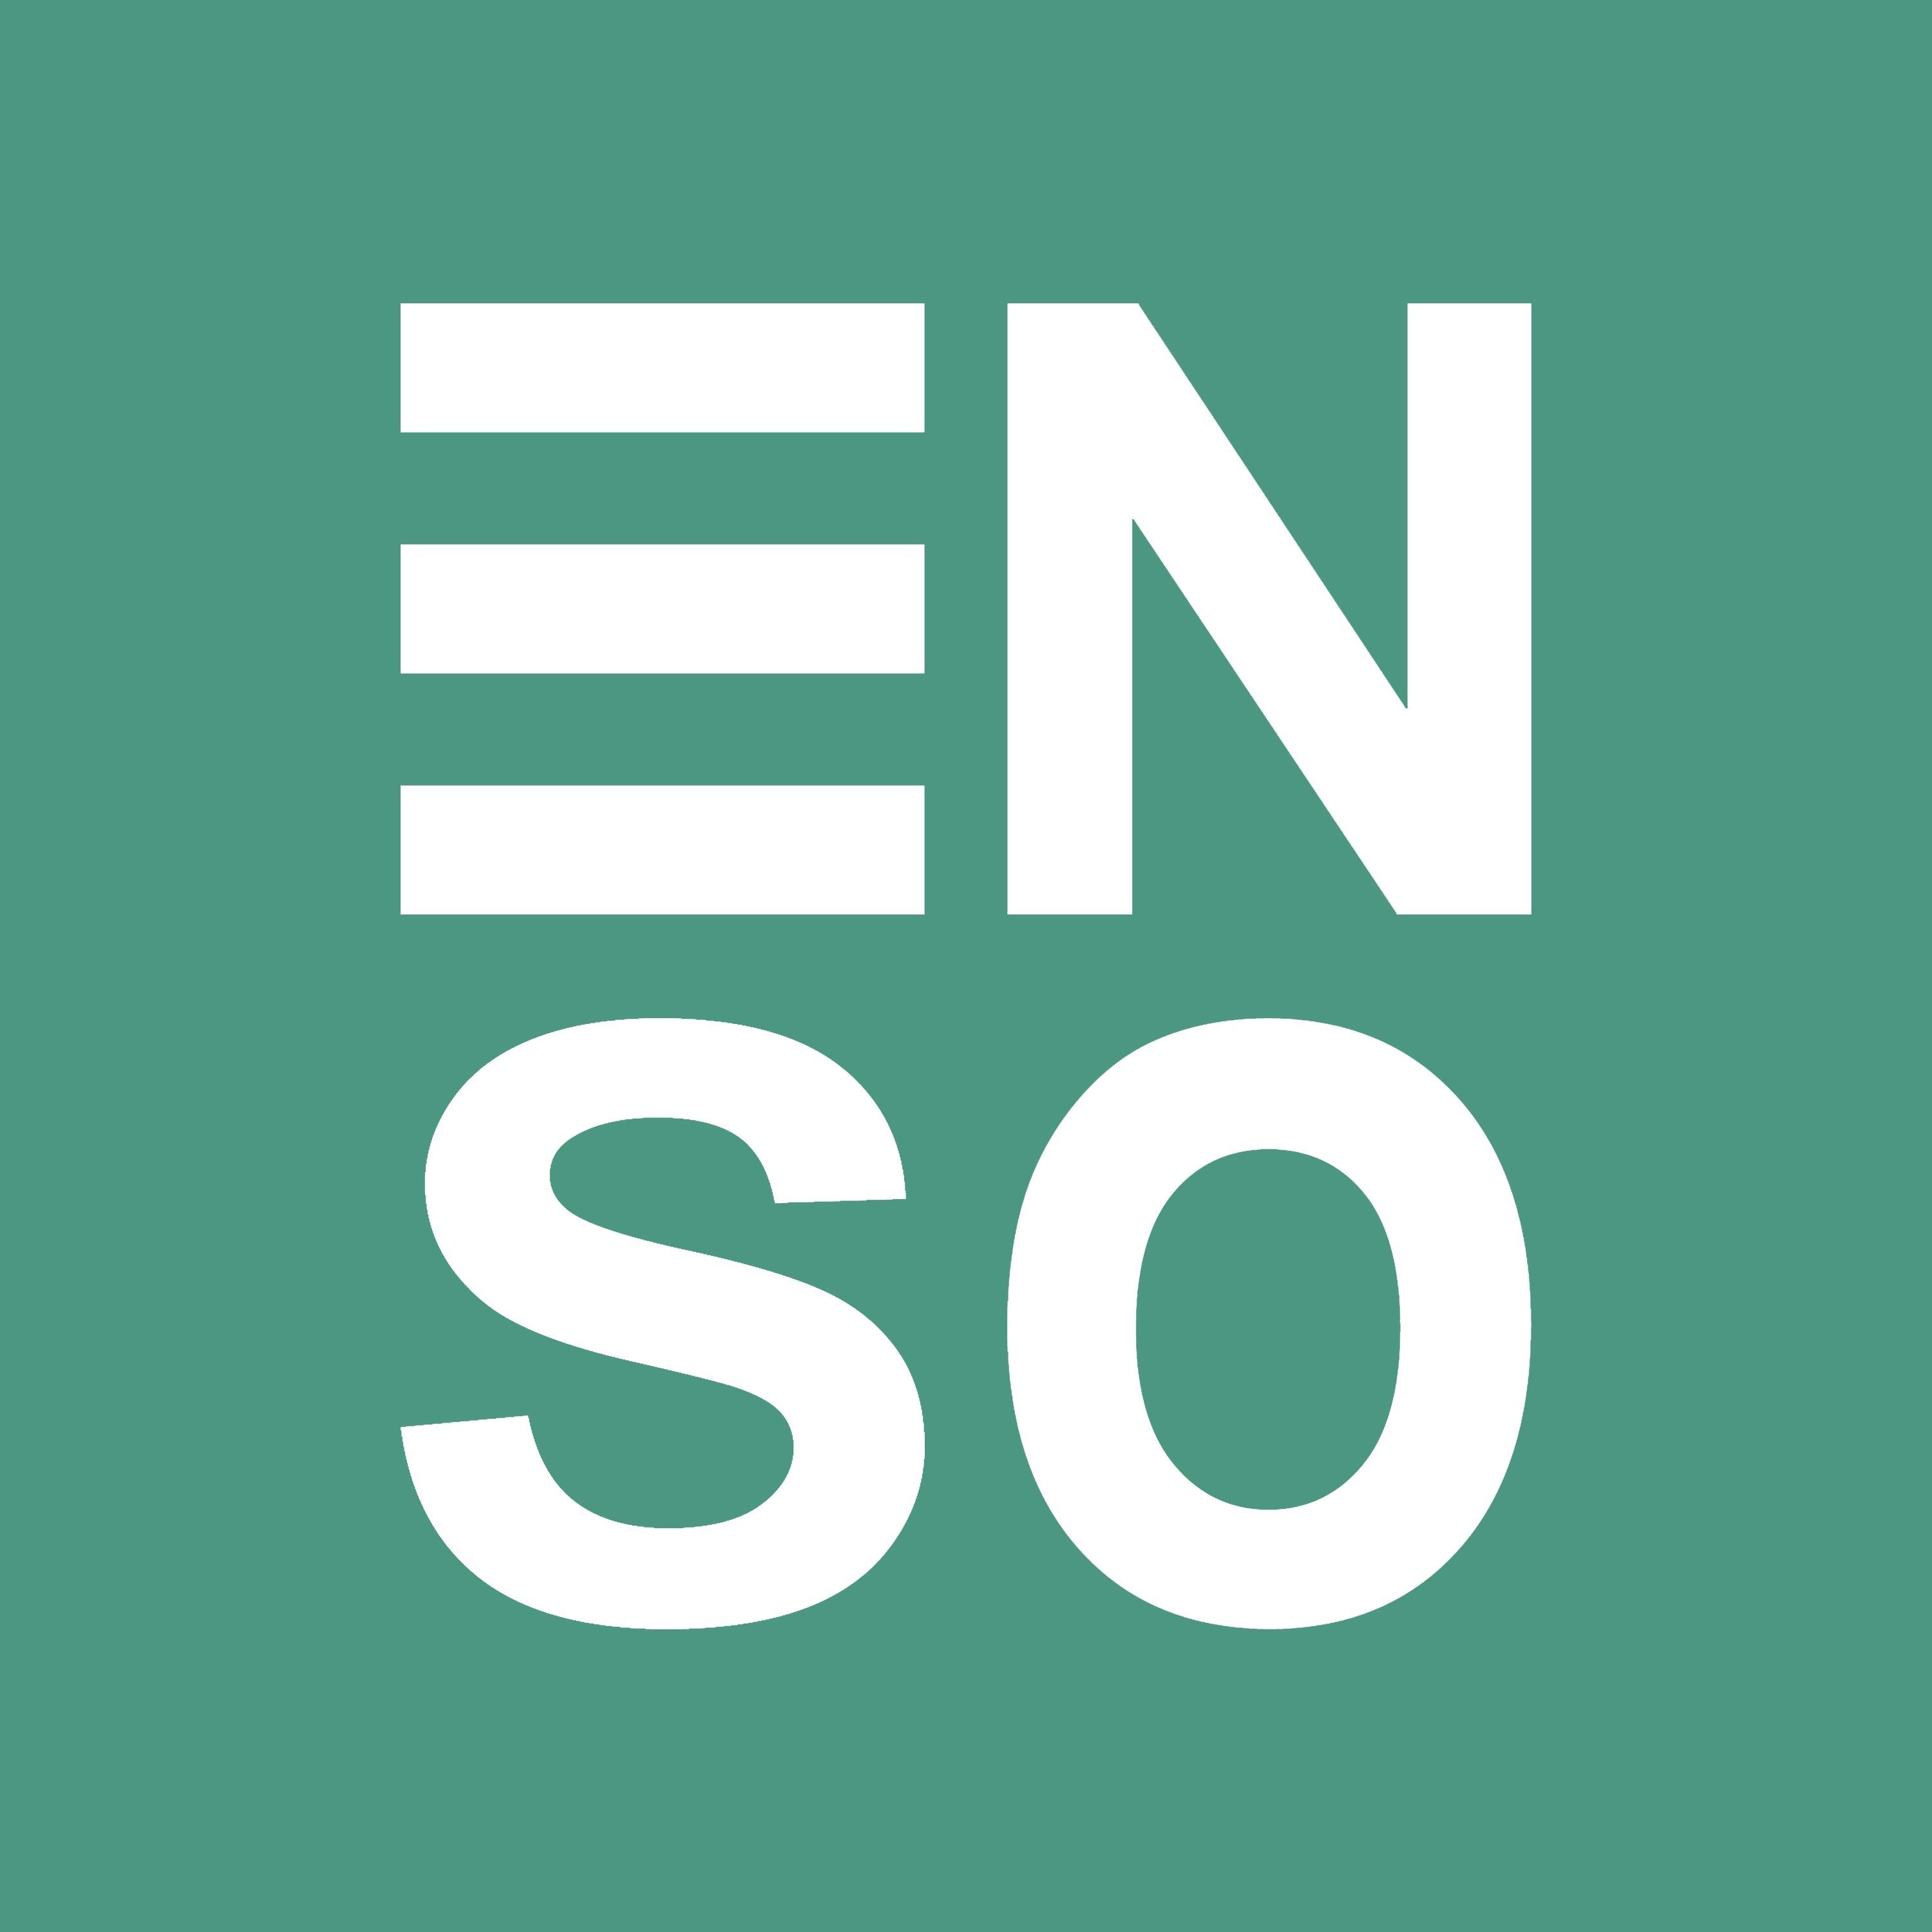 Enso Art Studio, Online Shop | Shopee Malaysia